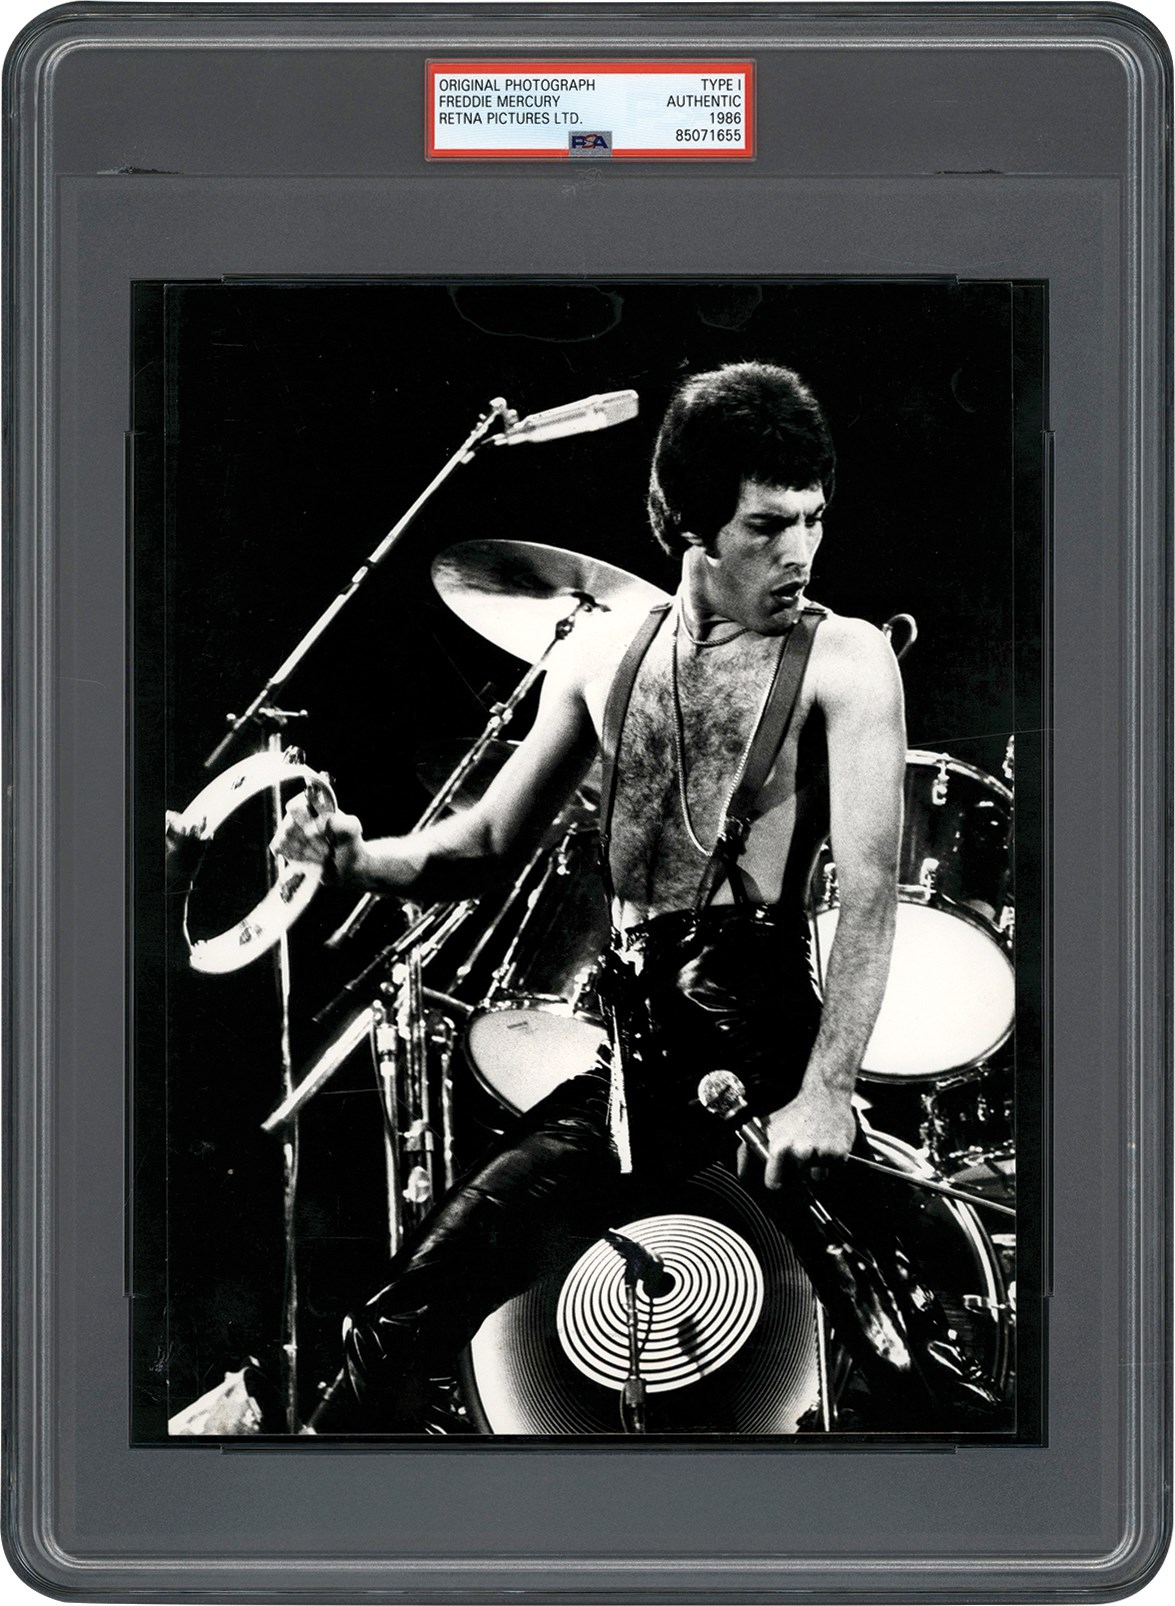 Rock And Pop Culture - 1986 Freddie Mercury "Queen" Original Photograph (PSA Type I)